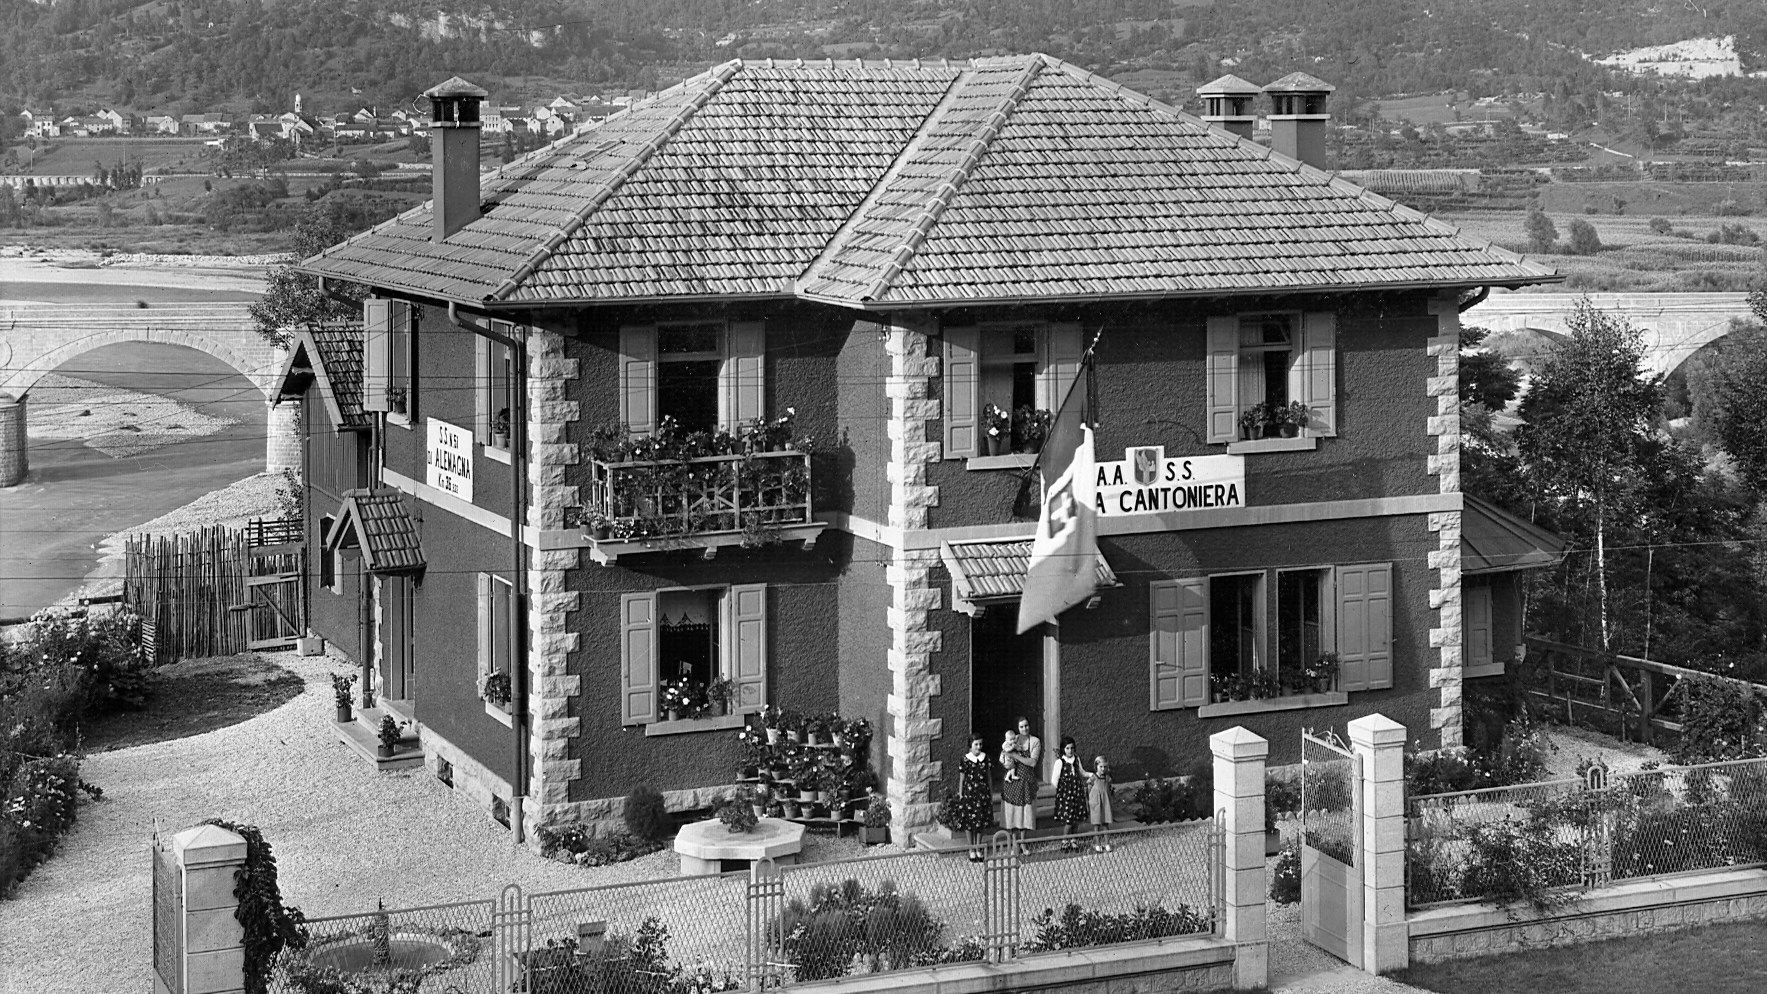 Casa cantoniera AASS sulla SS51 "Alemagna", anni ‘30 (Archivio storico Anas)